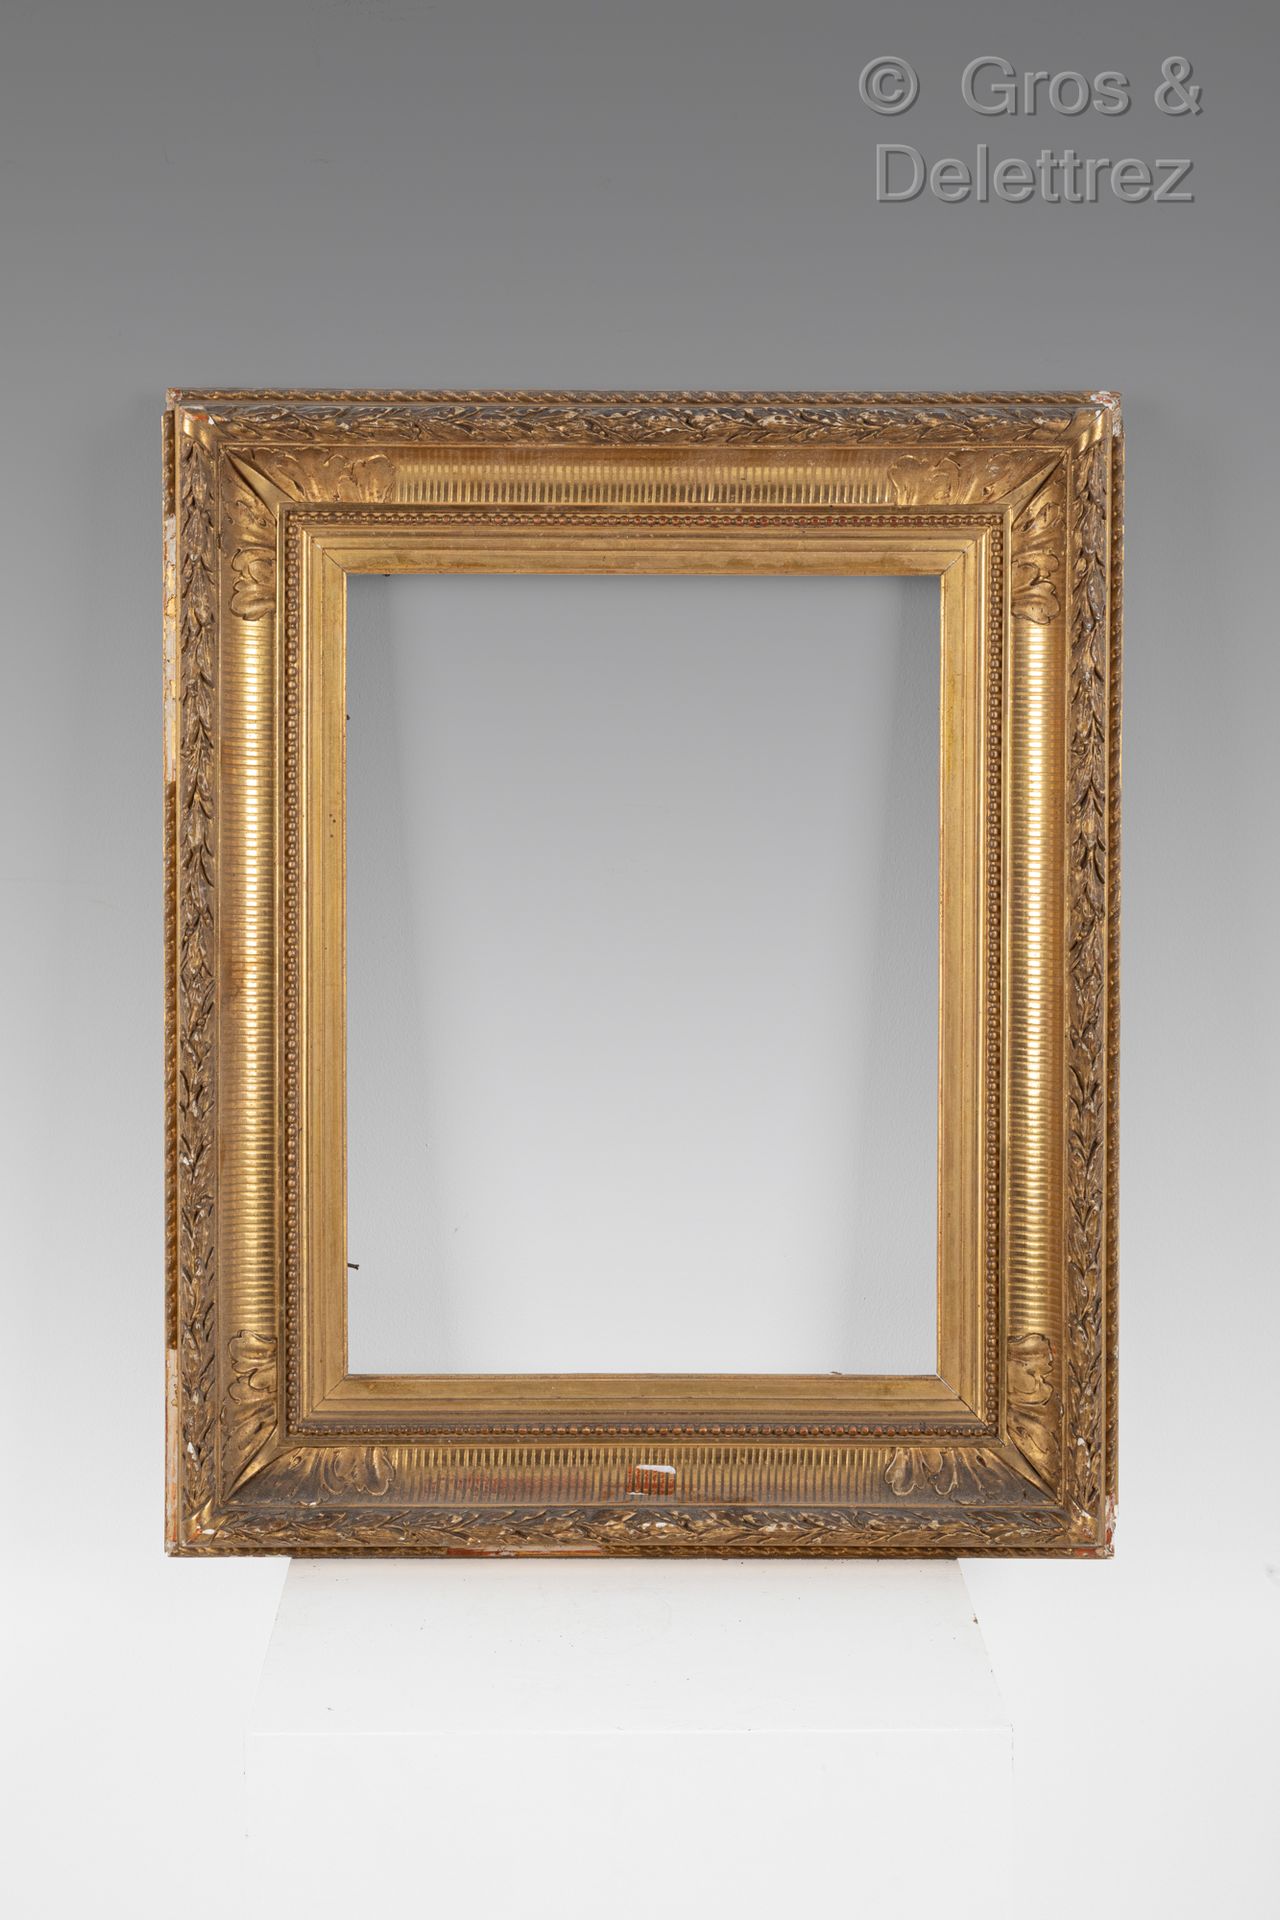 Null 木质和镀金灰泥框架，四角有运河、珍珠和刺桐叶装饰。

拿破仑三世时期

26,2 x 35,7 x 8 厘米